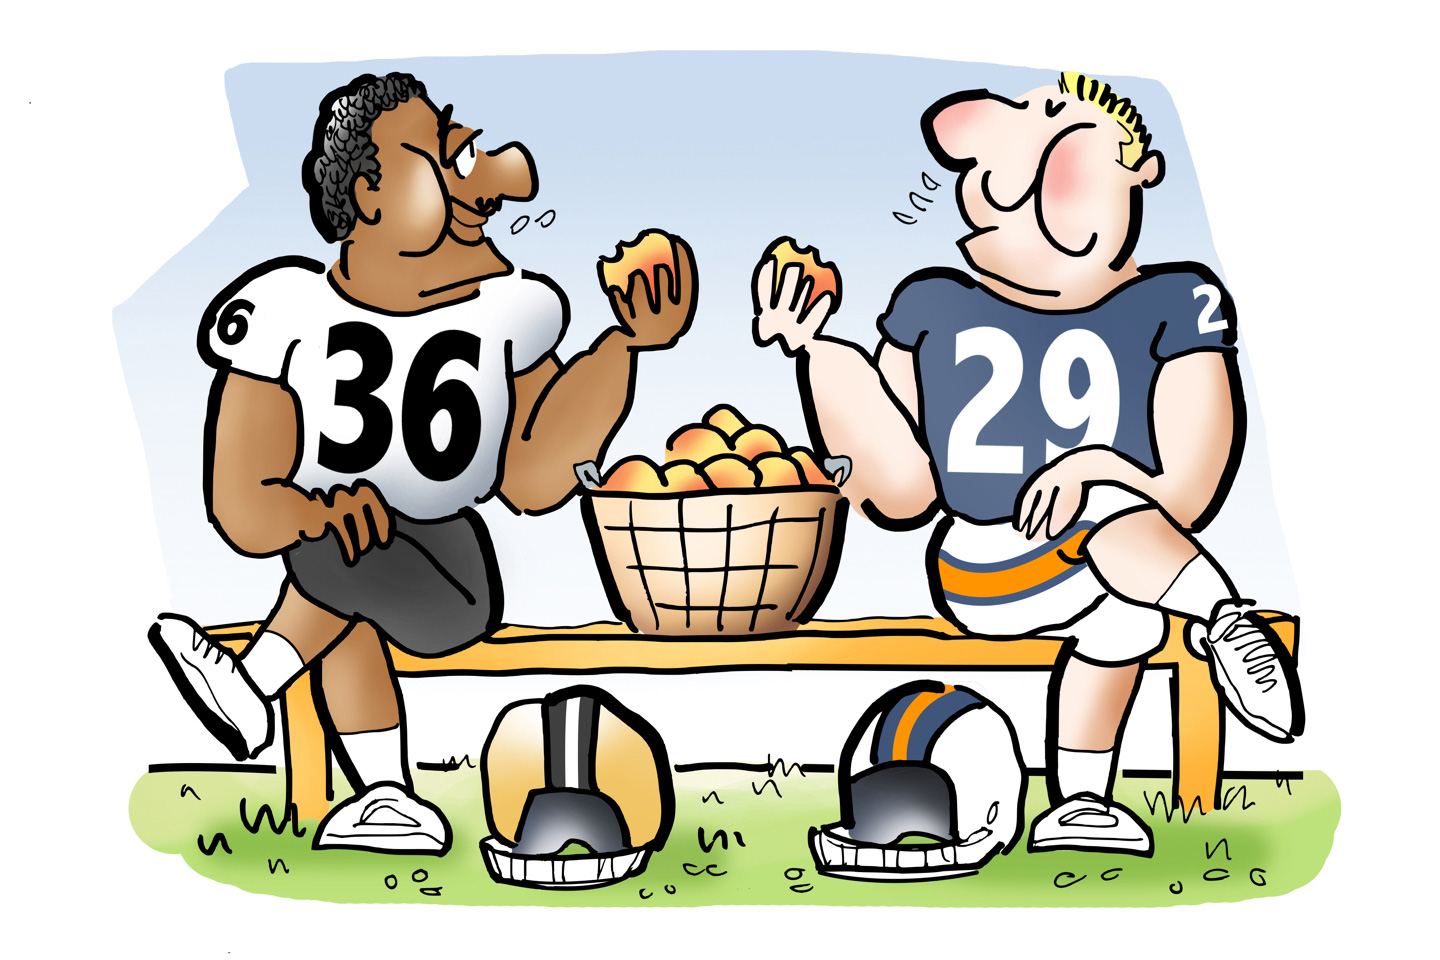 football huddle cartoon